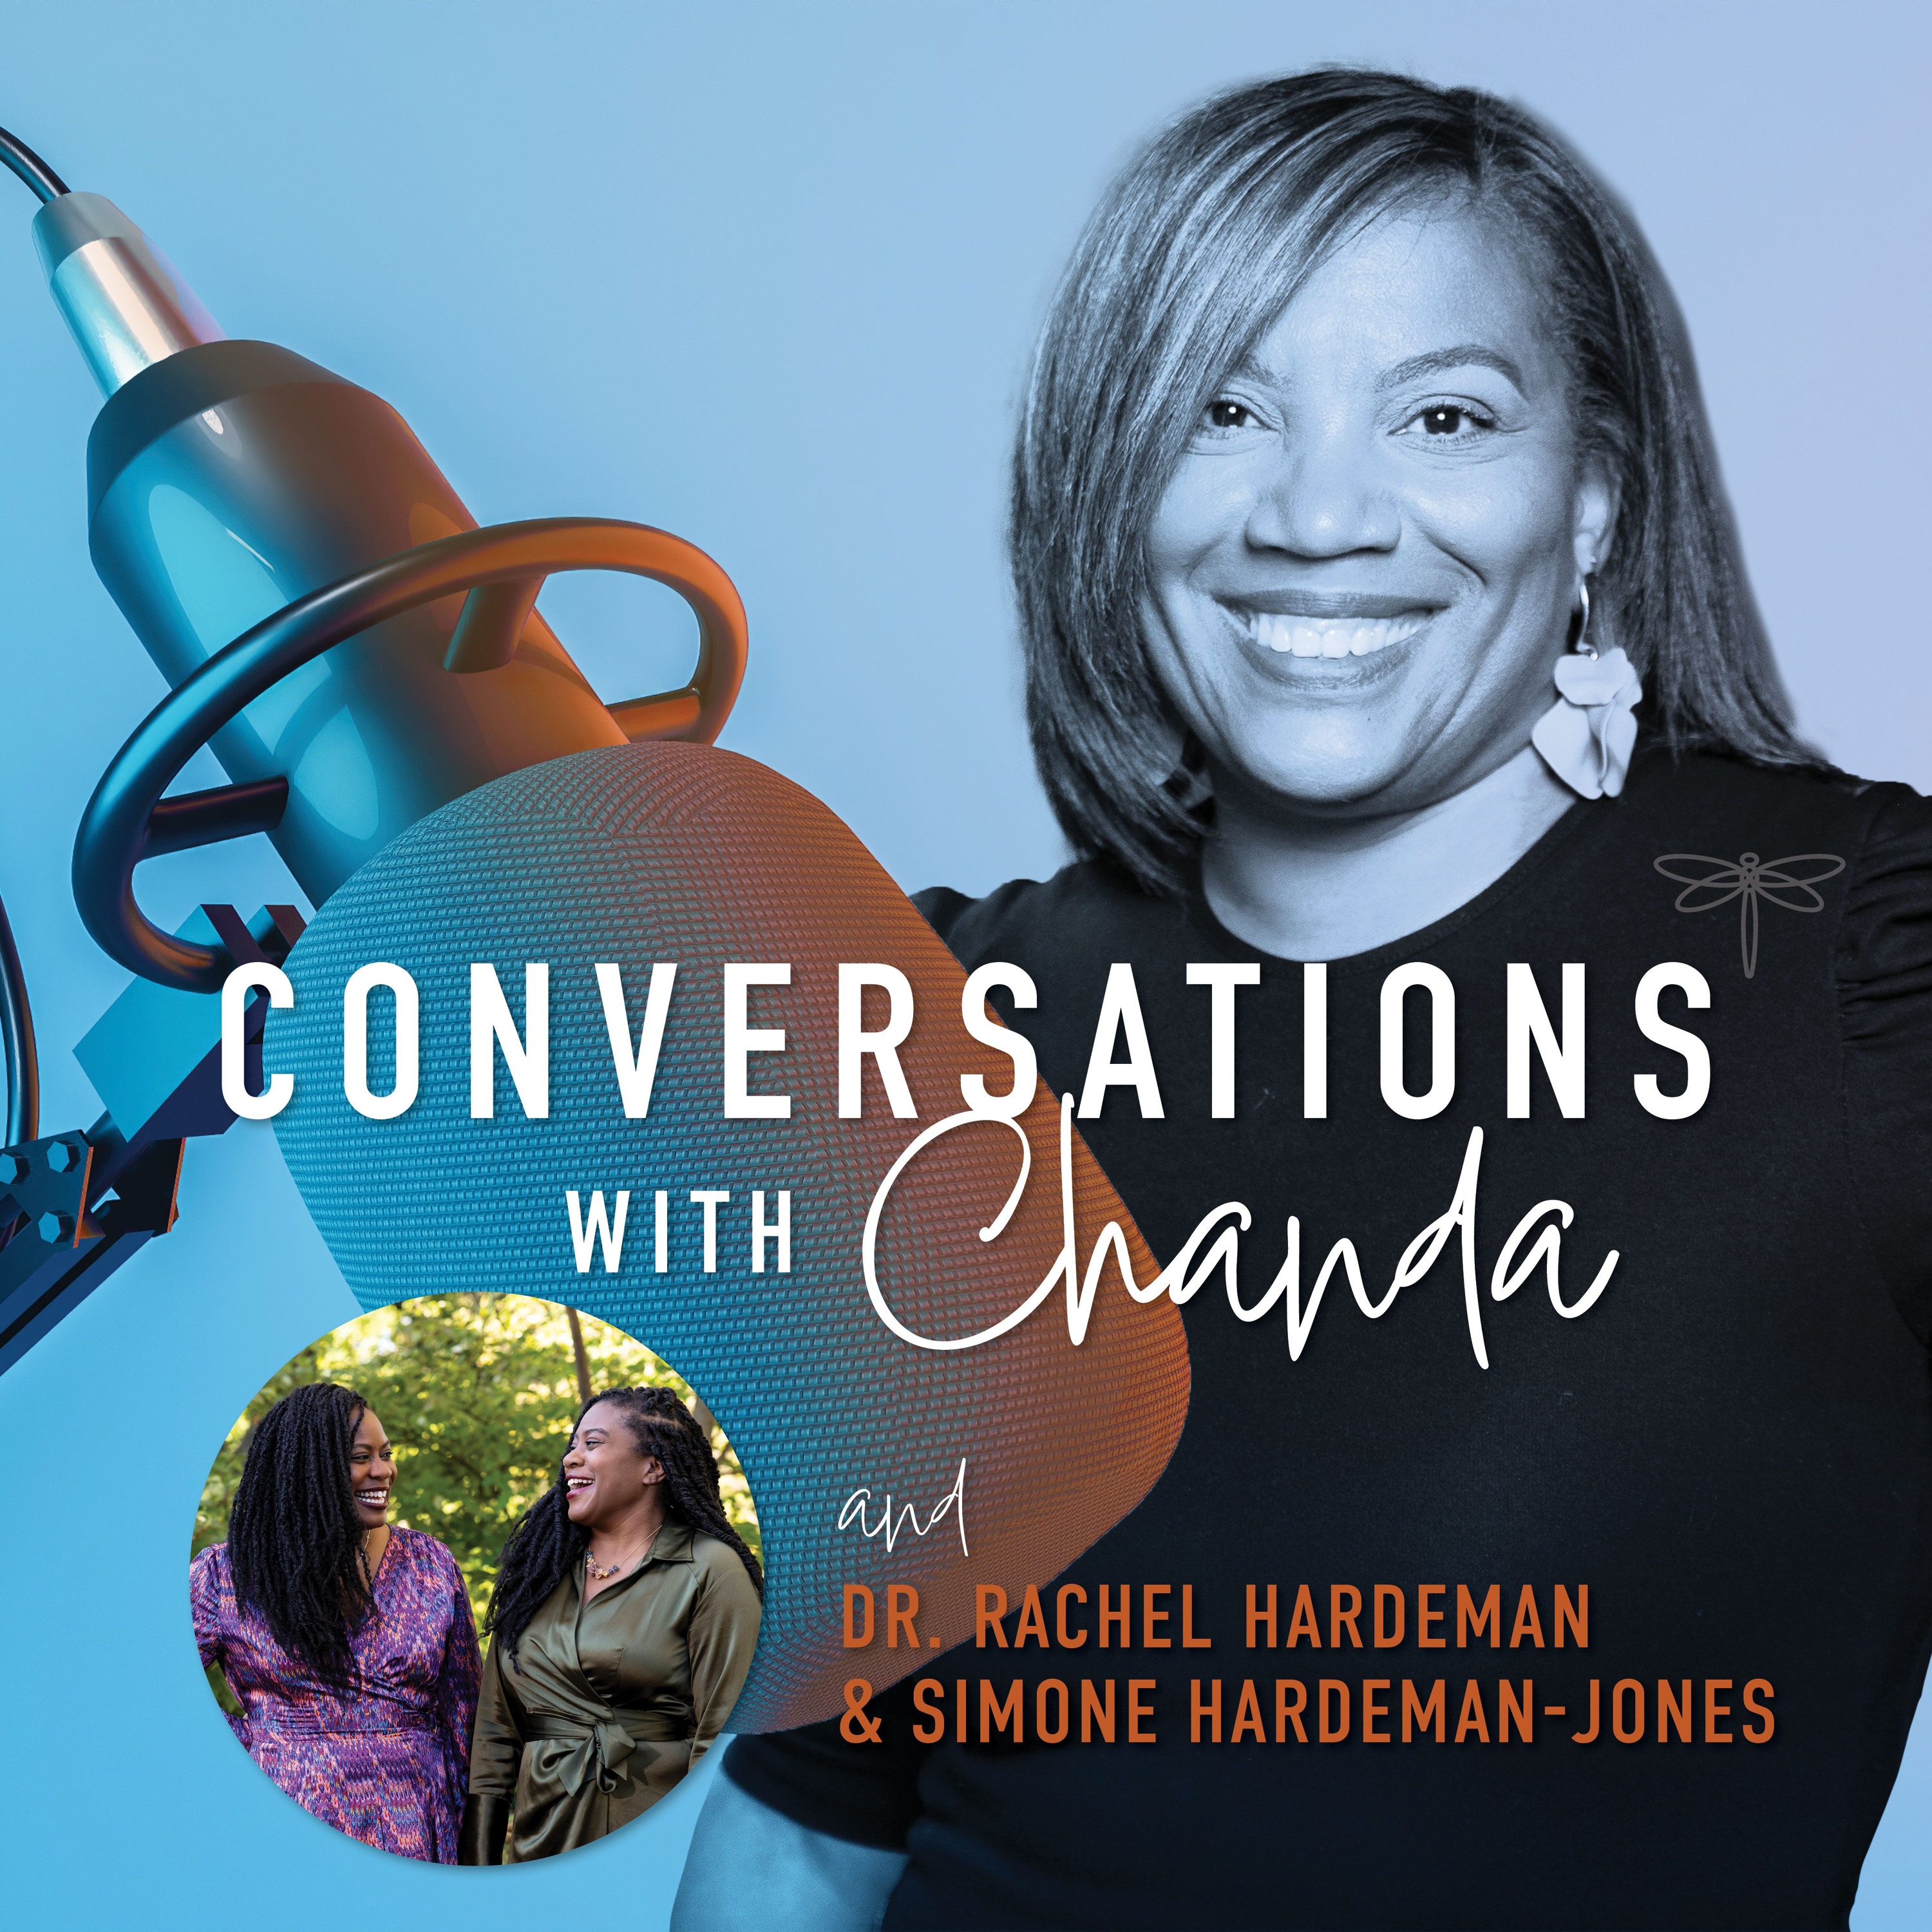 Harnessing Legacy & Leadership - A Conversation with Dr. Rachel Hardeman and Simone Hardeman-Jones